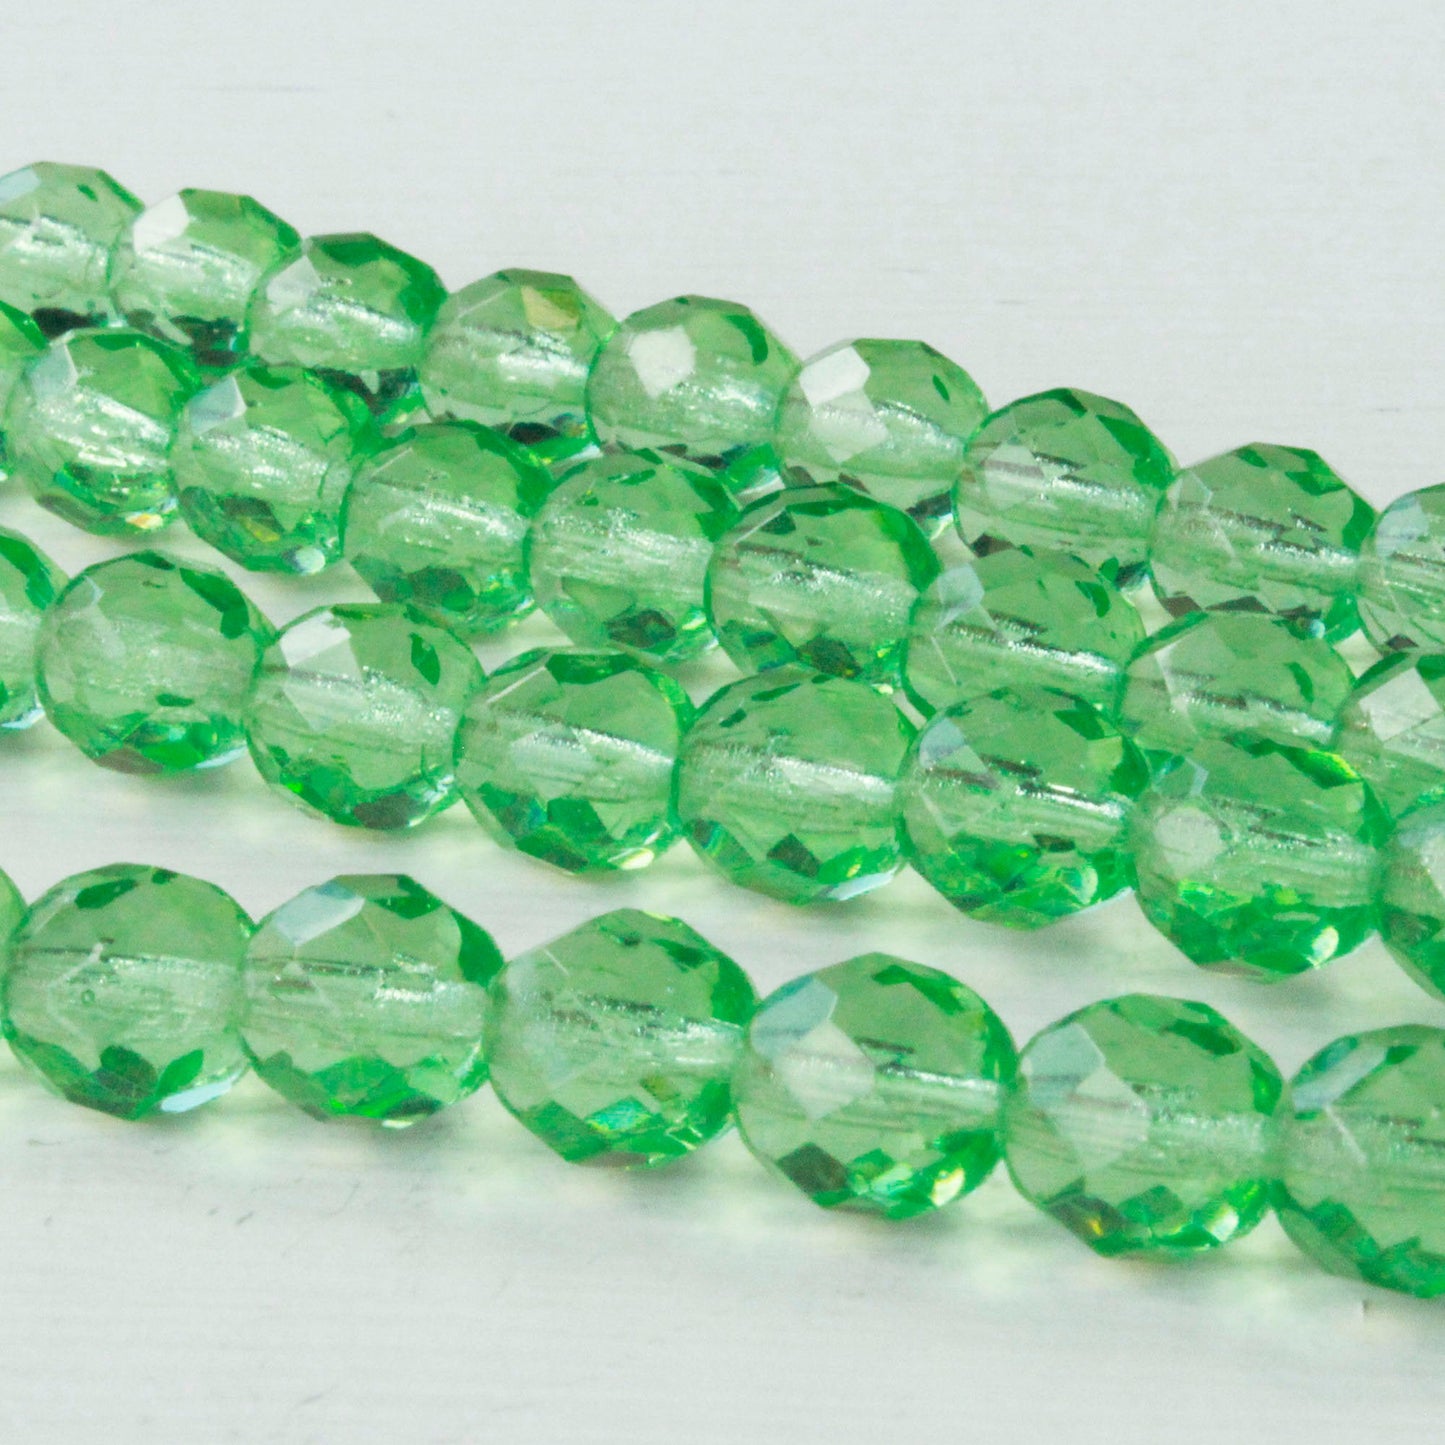 8mm and 10mm Round Glass Beads - Pastel Peridot Green - Choose Amount